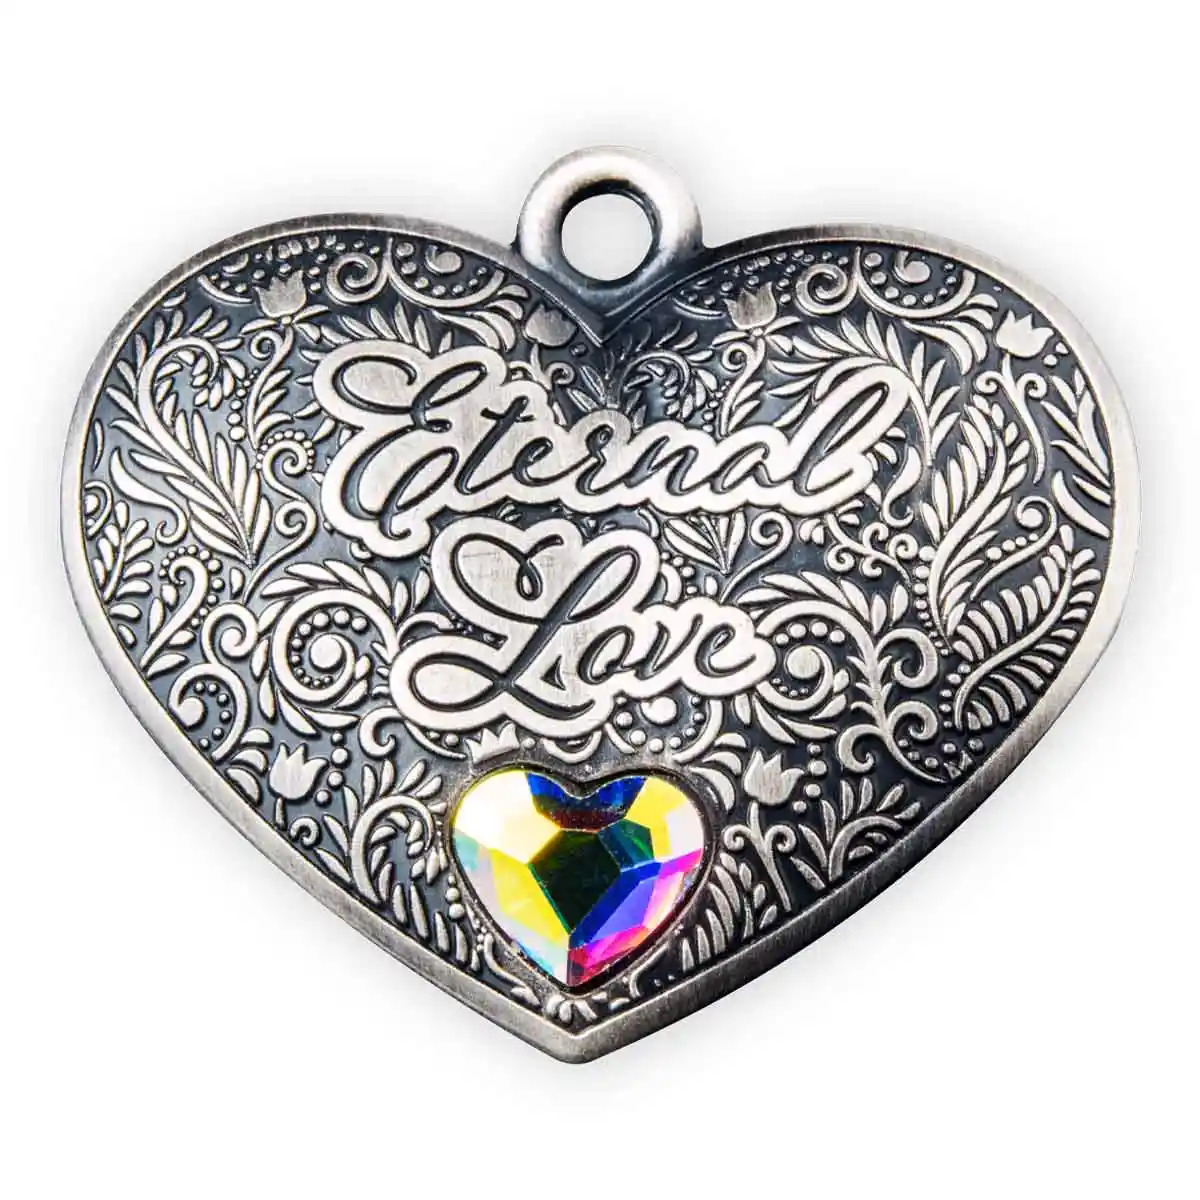 Eternal Love $1 Heart-shaped Silver Antique Coin